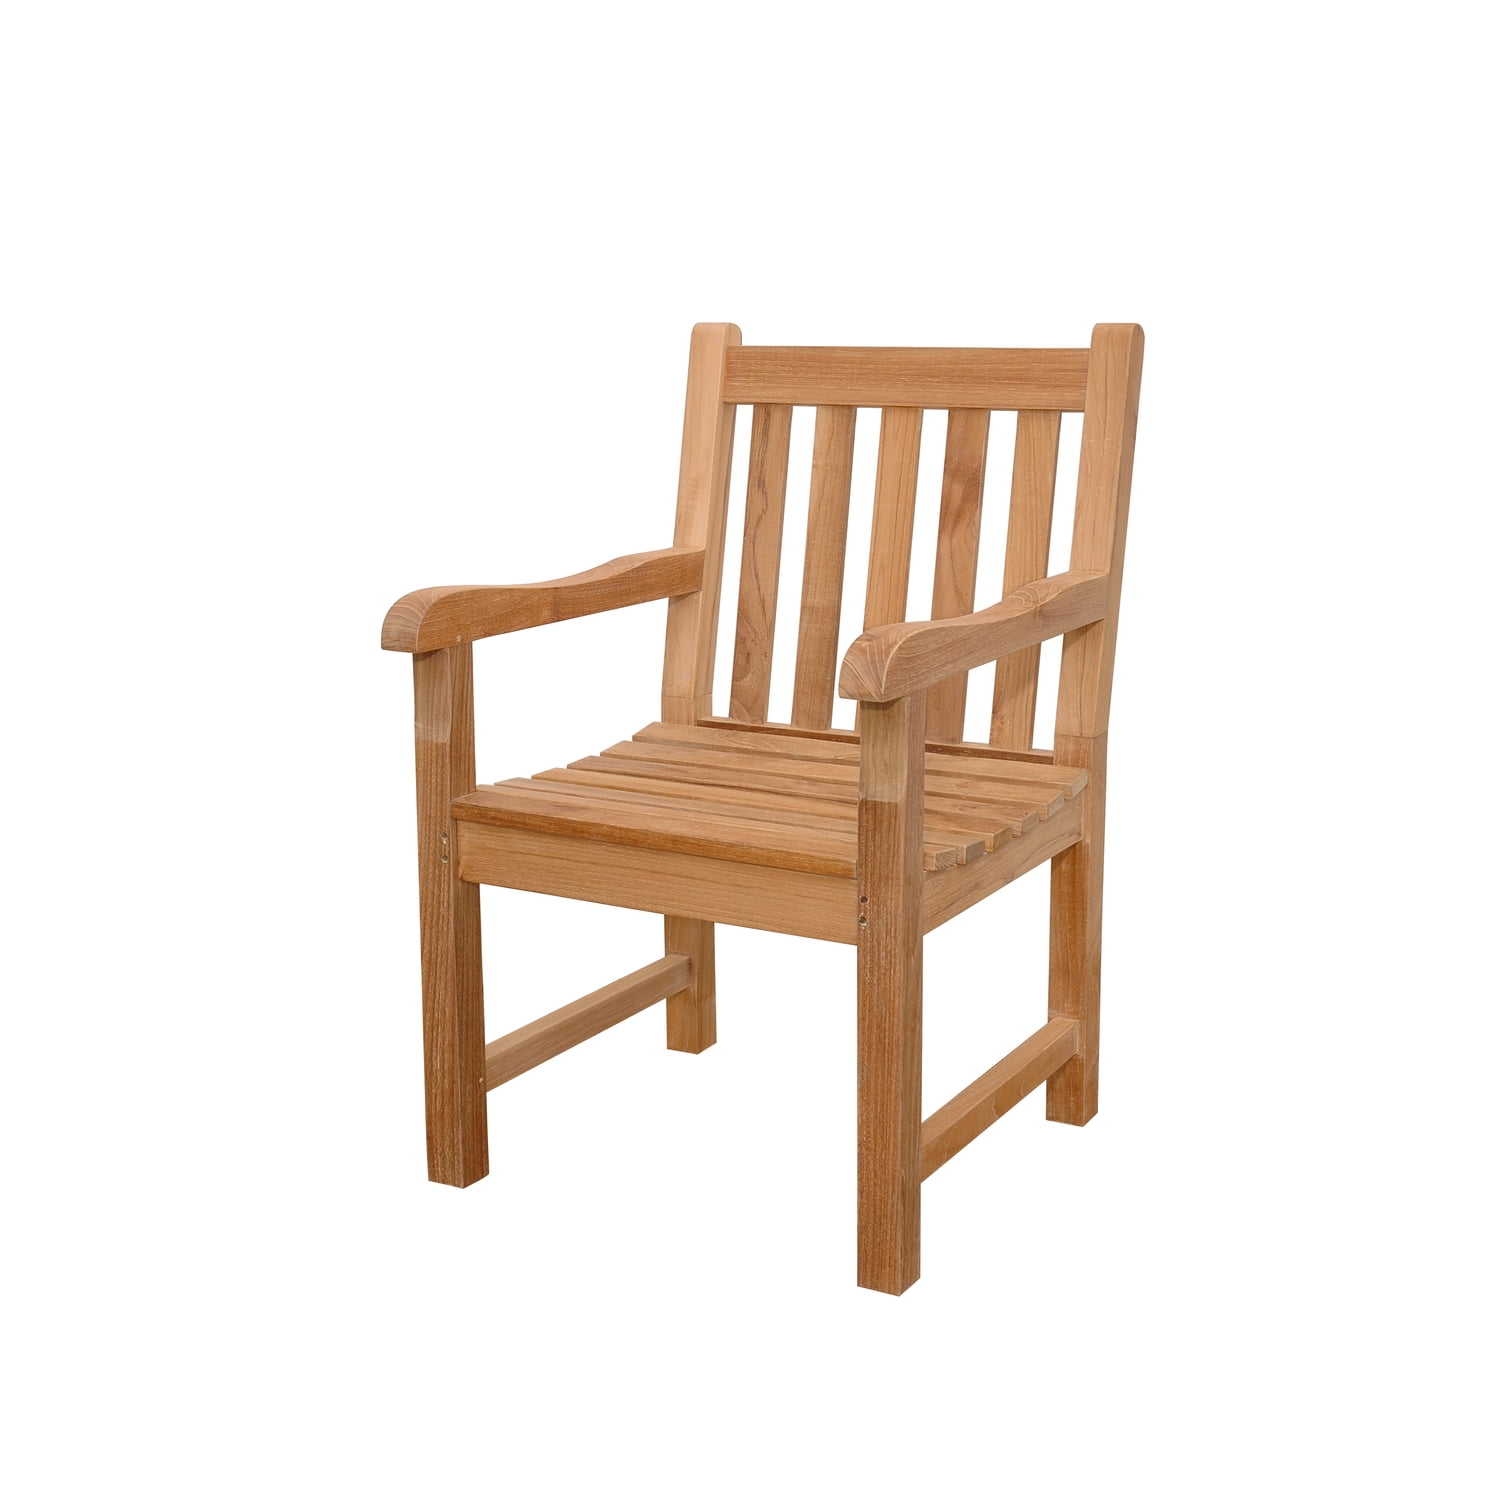 Sand Hopkins 90134ONLMI 2x4basics AnySize Chair or Bench Ends 